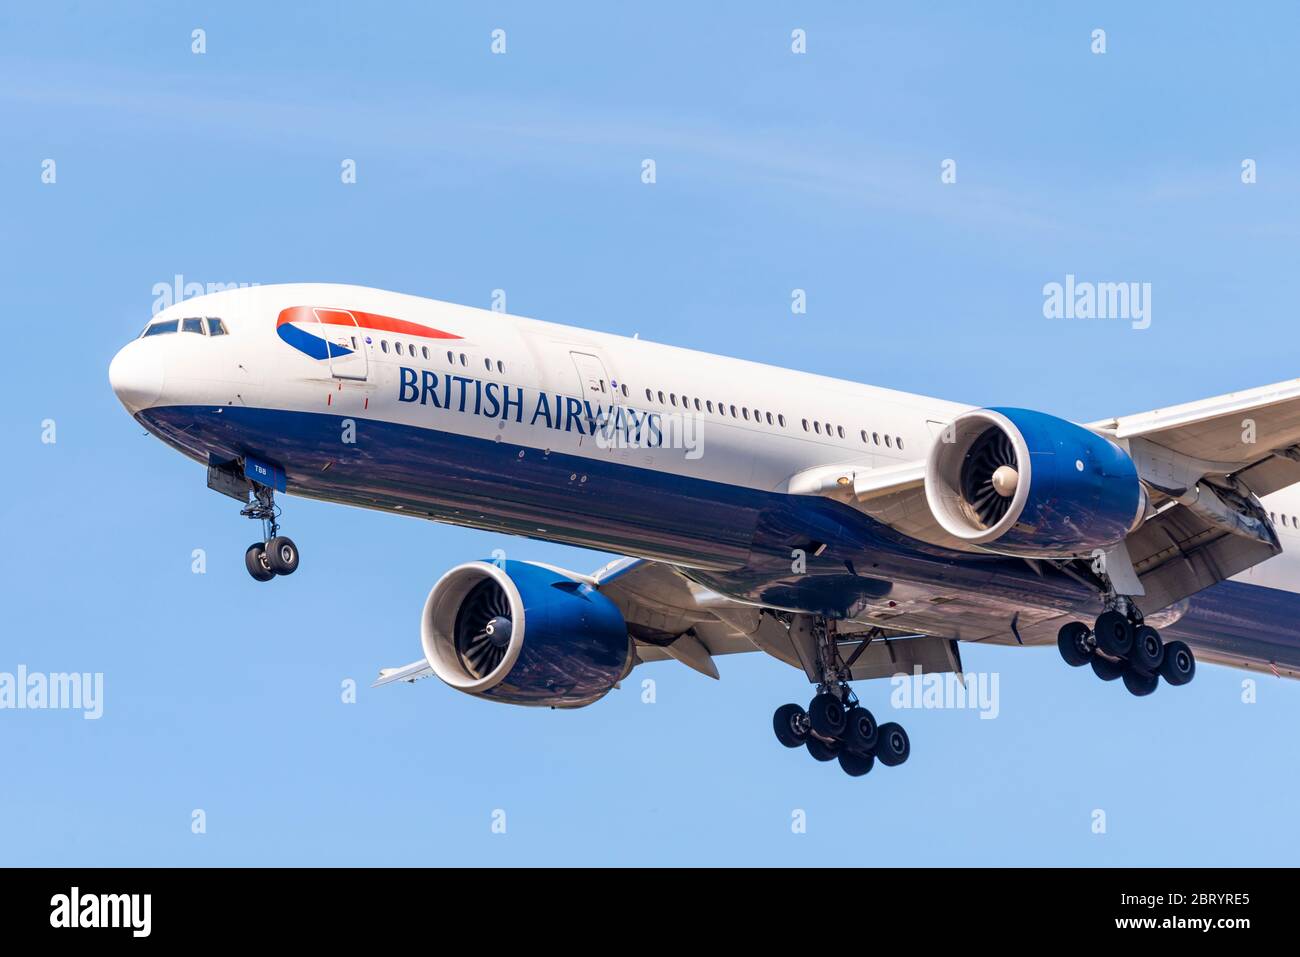 British Airways Boeing 777 jet airliner plane landing at London Heathrow Airport over Cranford, London, UK during COVID-19 lockdown. Stock Photo